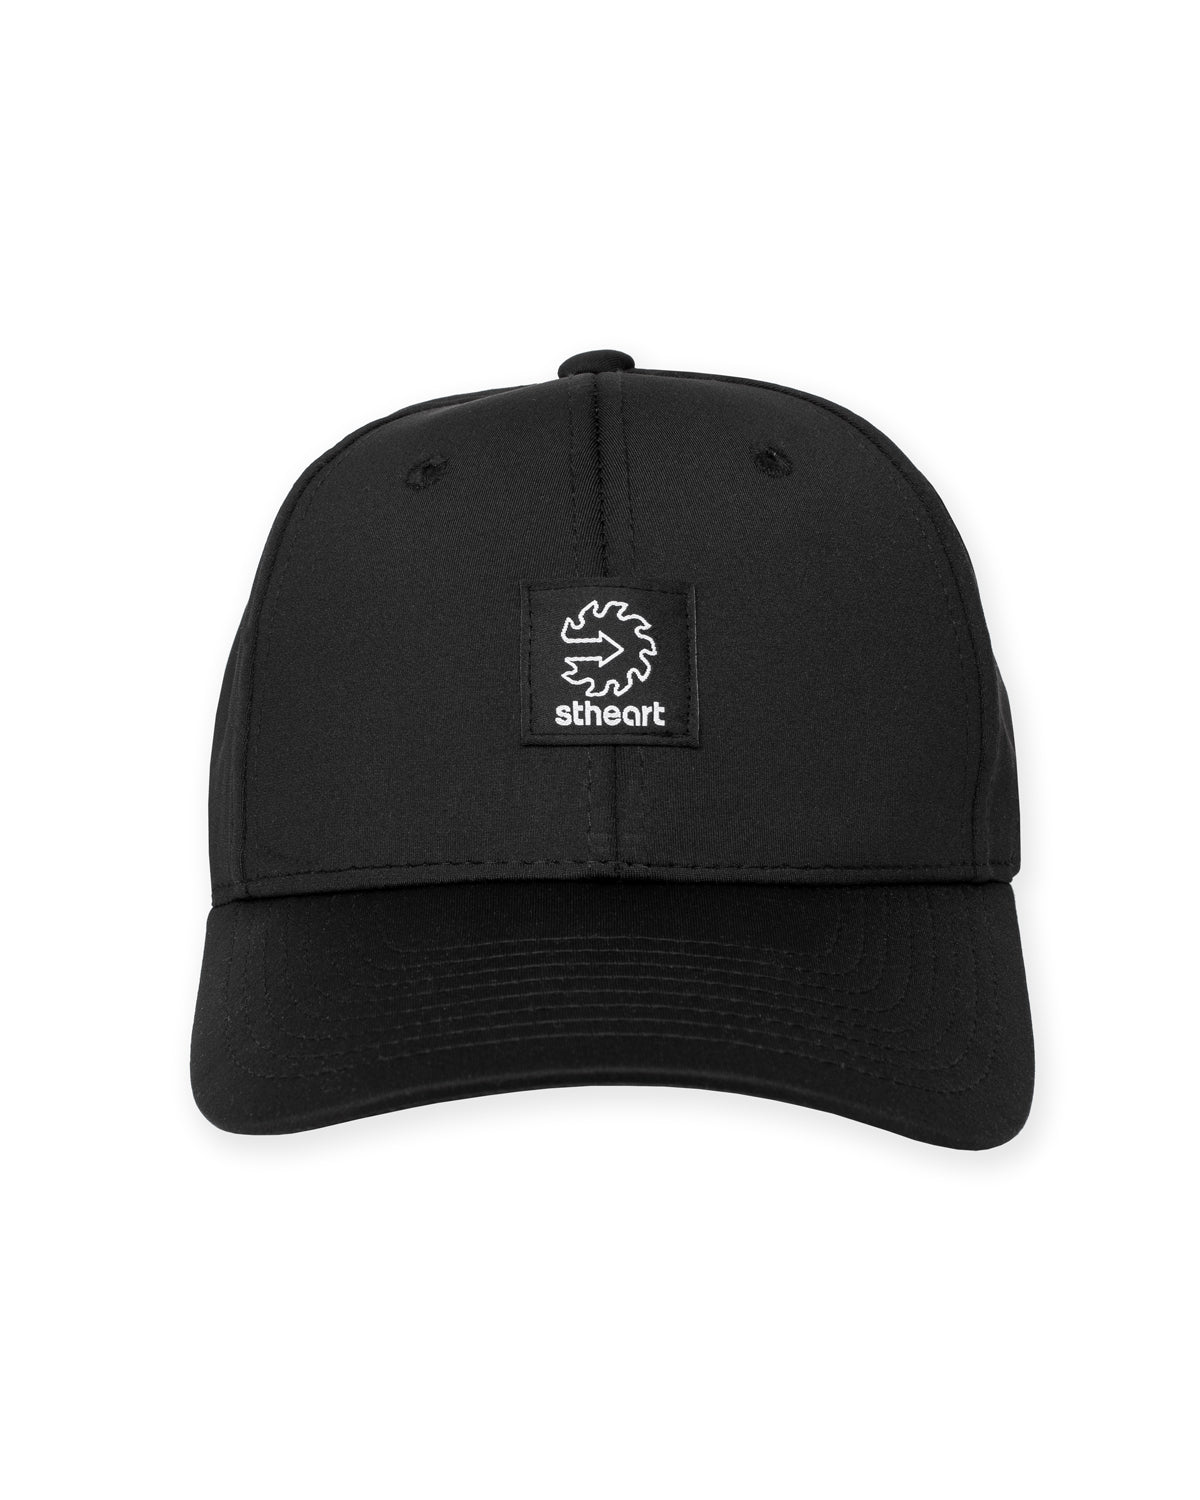 Label Hat | Black